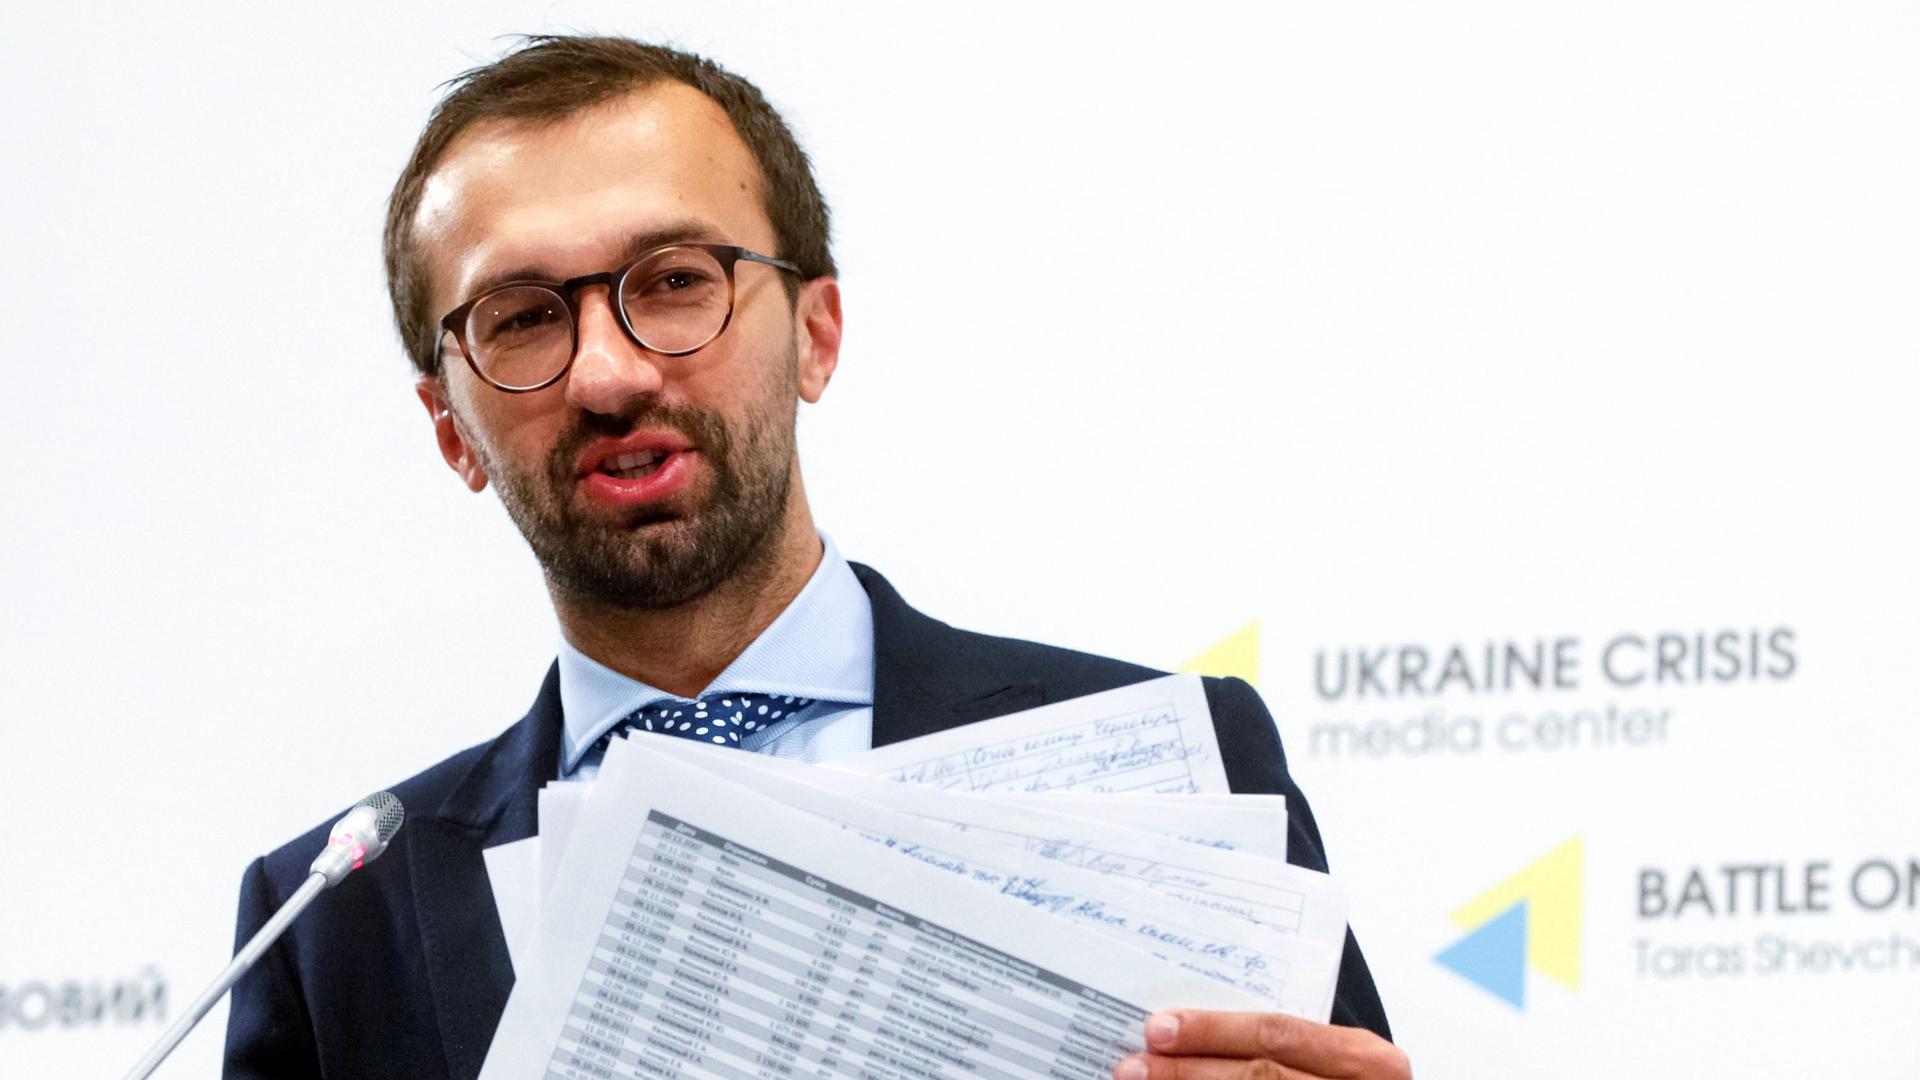 Former Ukrainian lawmaker Sergii Leshchenko displays papers from secret ledgers 